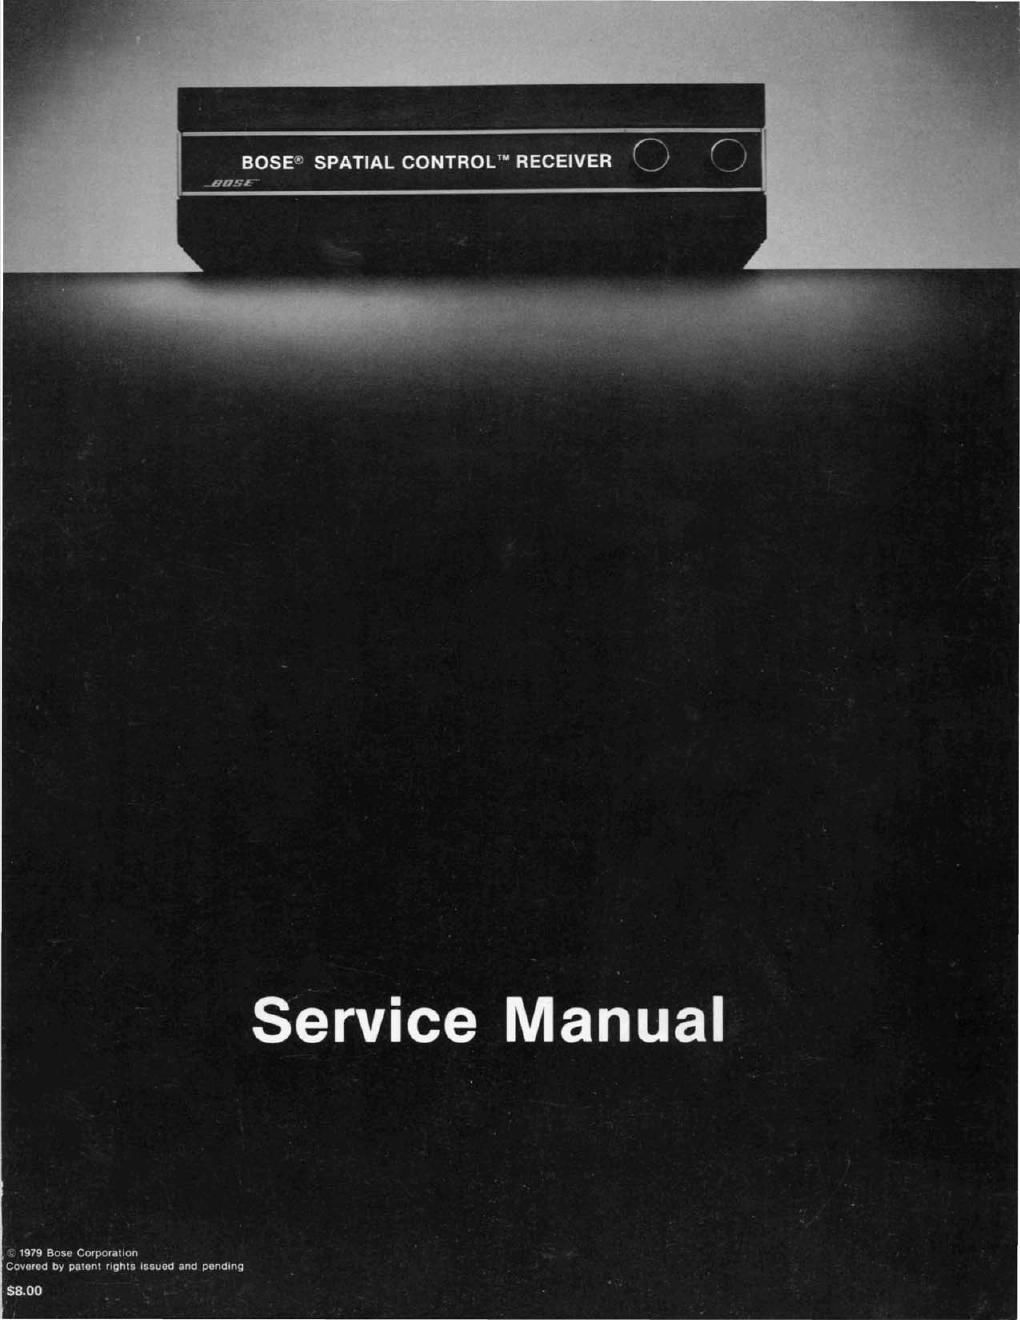 bose spatial control service manual